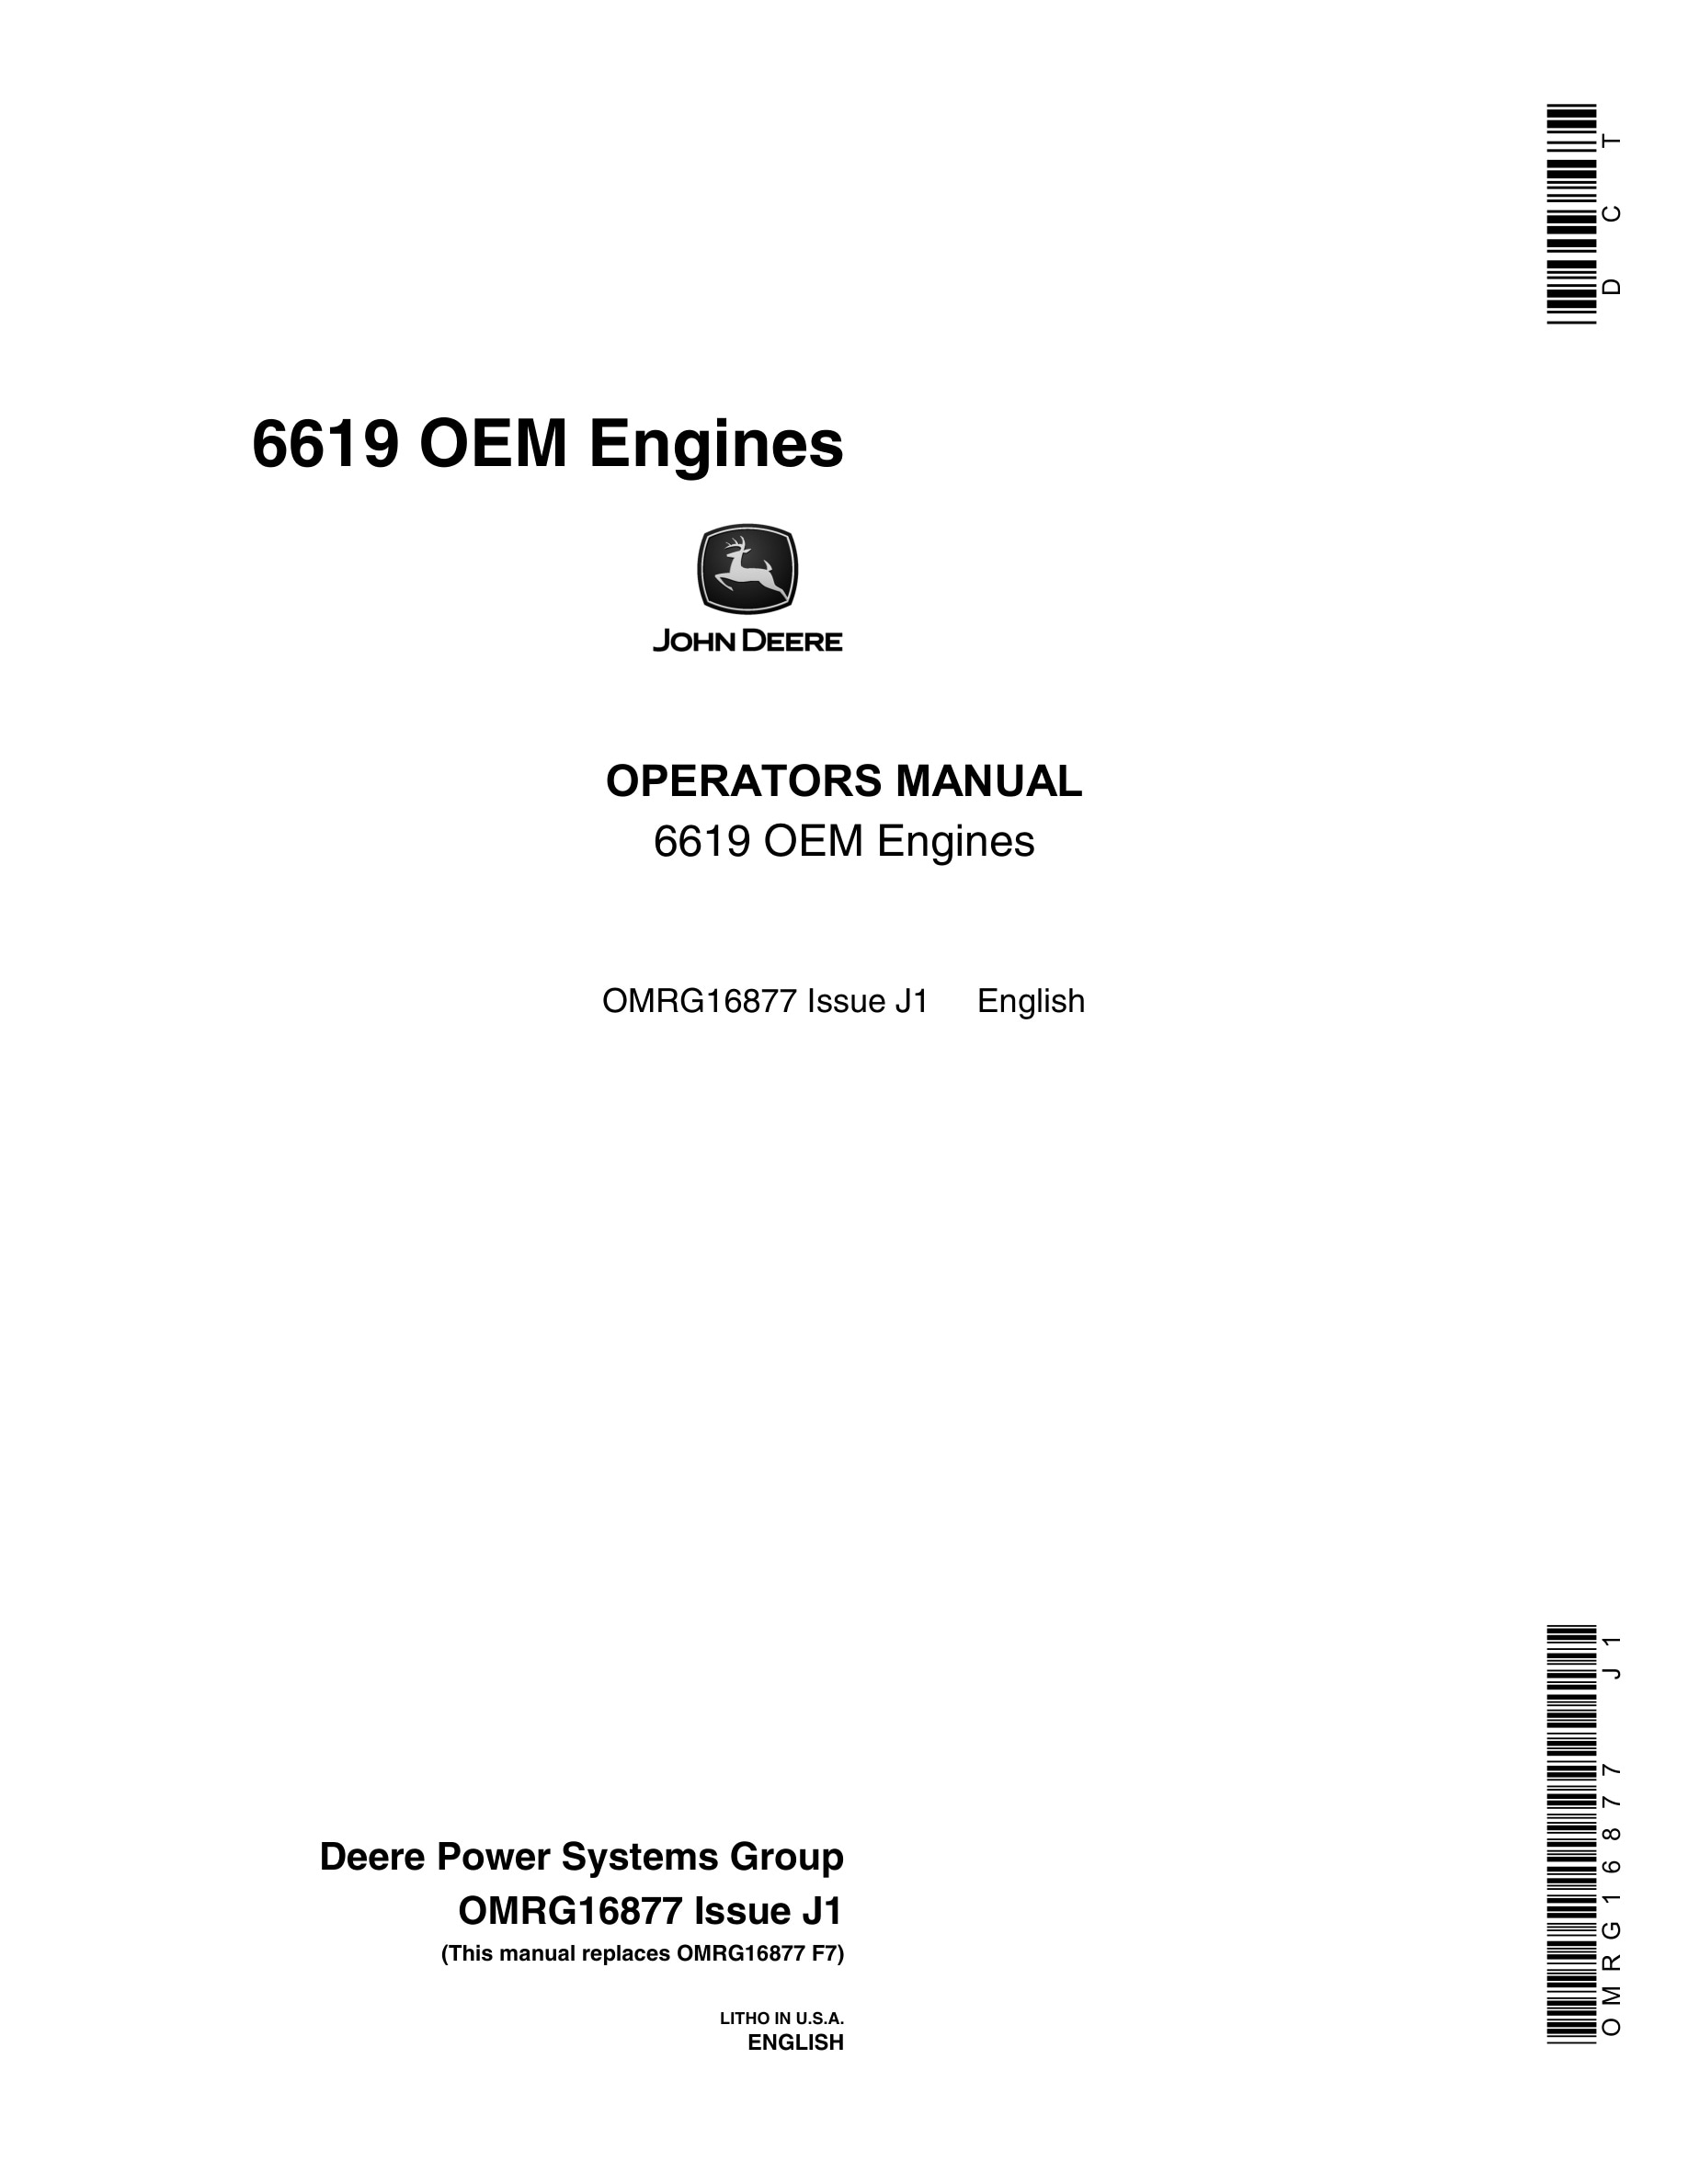 John Deere PowerTech 6619 OEM Engines Operator Manual OMRG16877-1